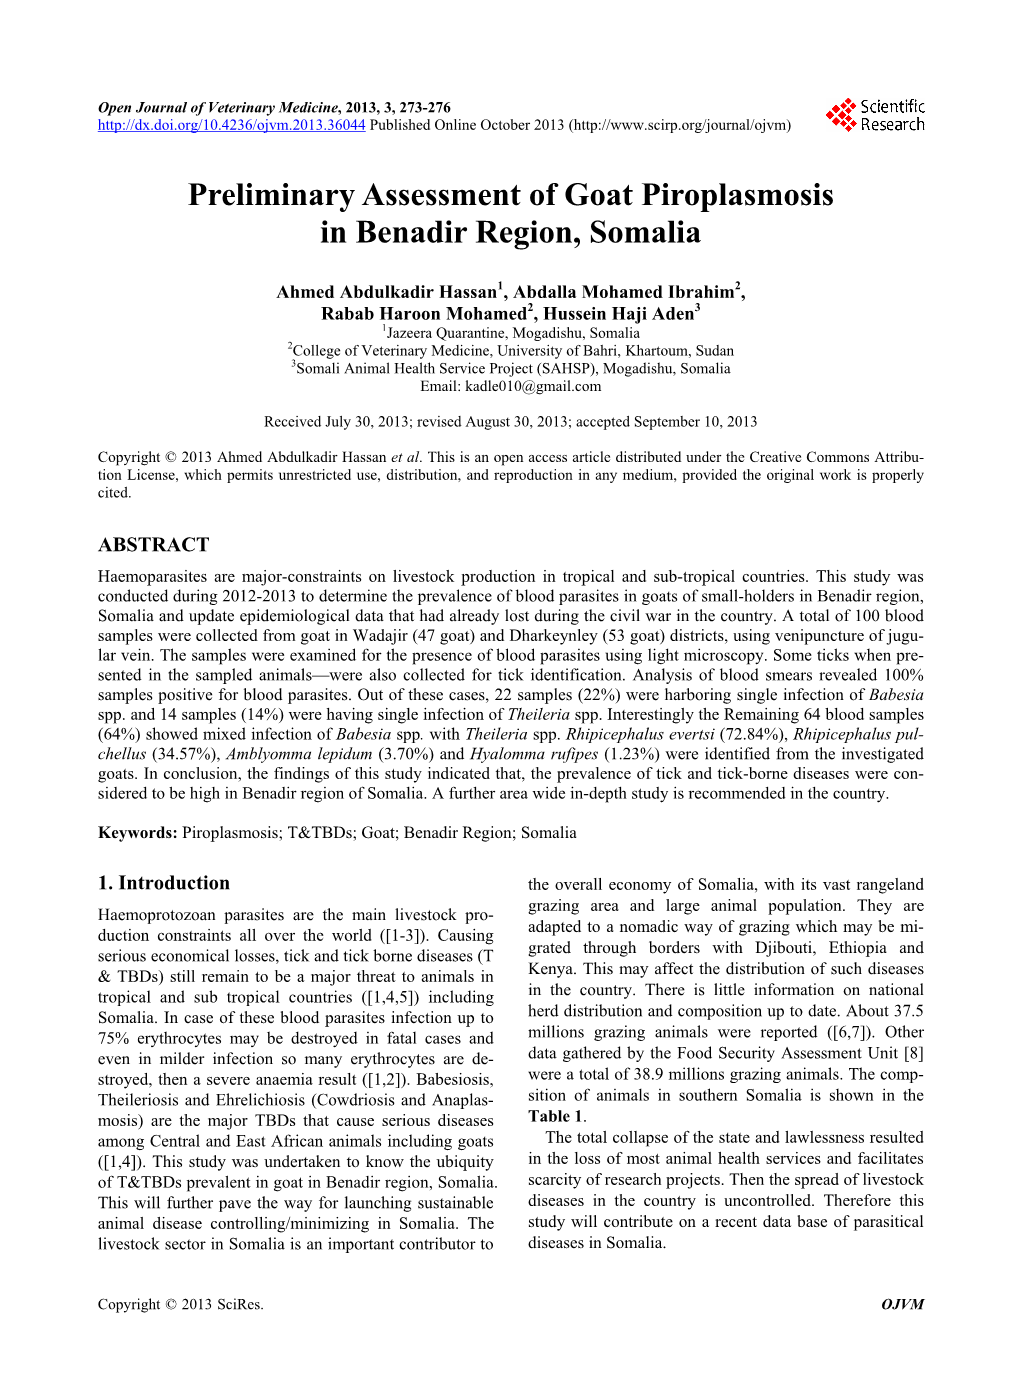 Preliminary Assessment of Goat Piroplasmosis in Benadir Region, Somalia